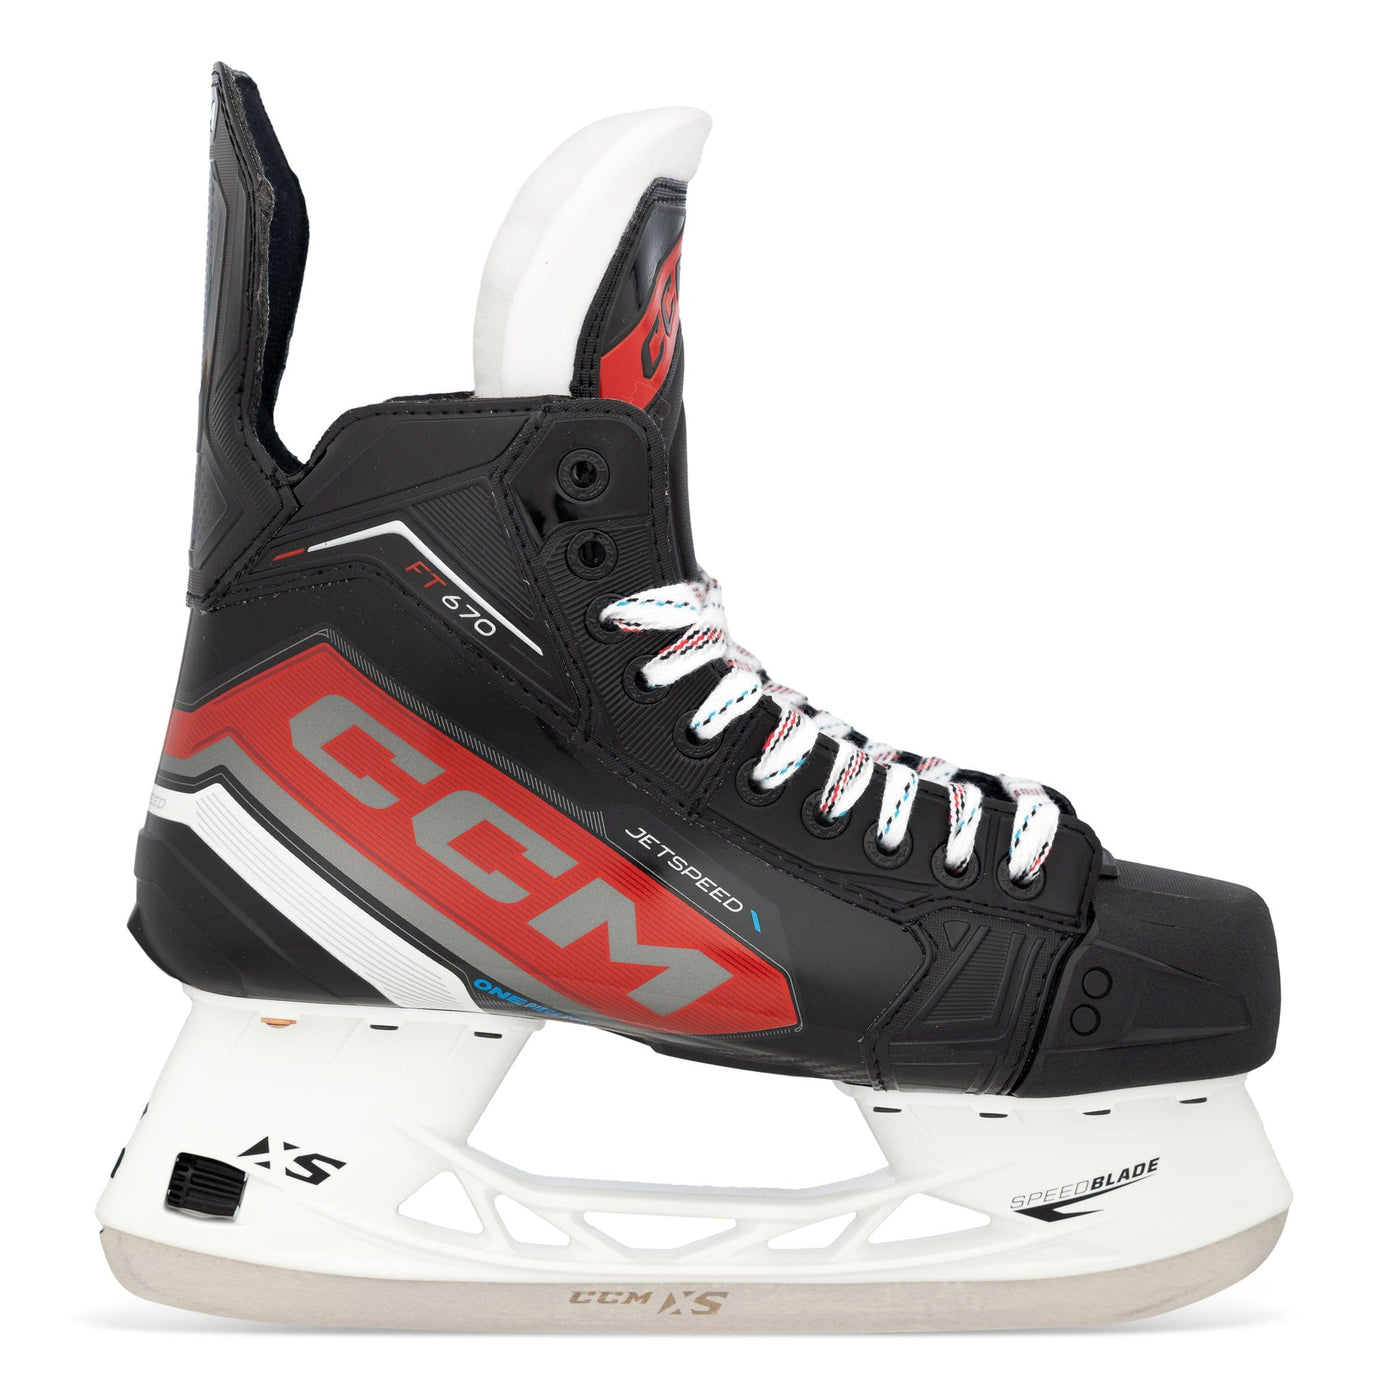 CCM Jetspeed FT670 Senior Hockey Skates - The Hockey Shop Source For Sports